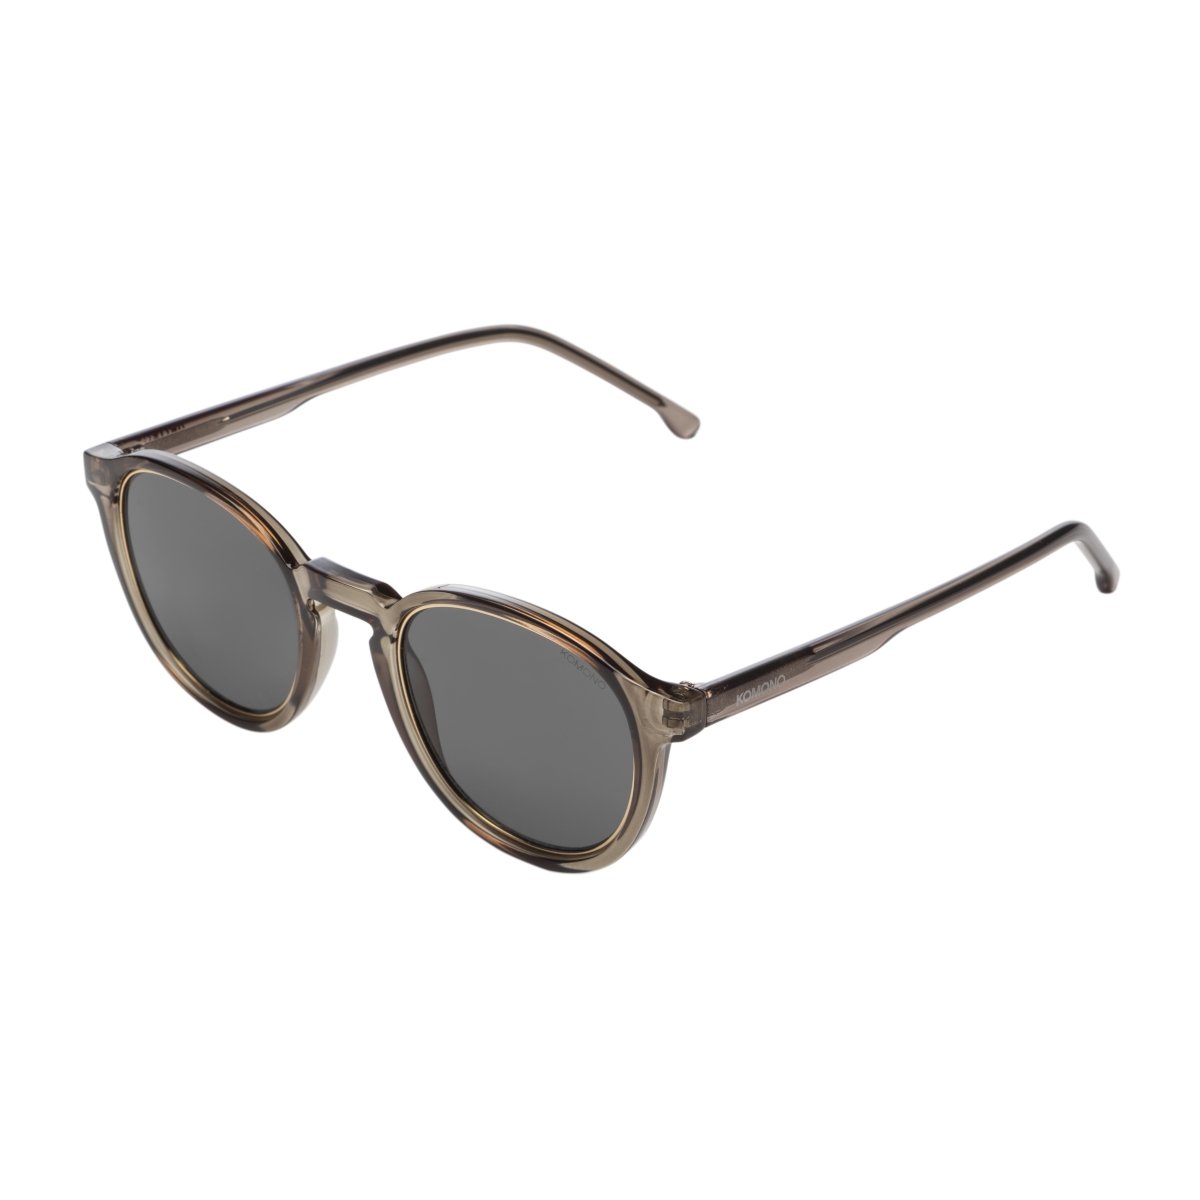 Komono Sunglasses - Στρογγυλά γυαλιά ηλίου - Musk-silver